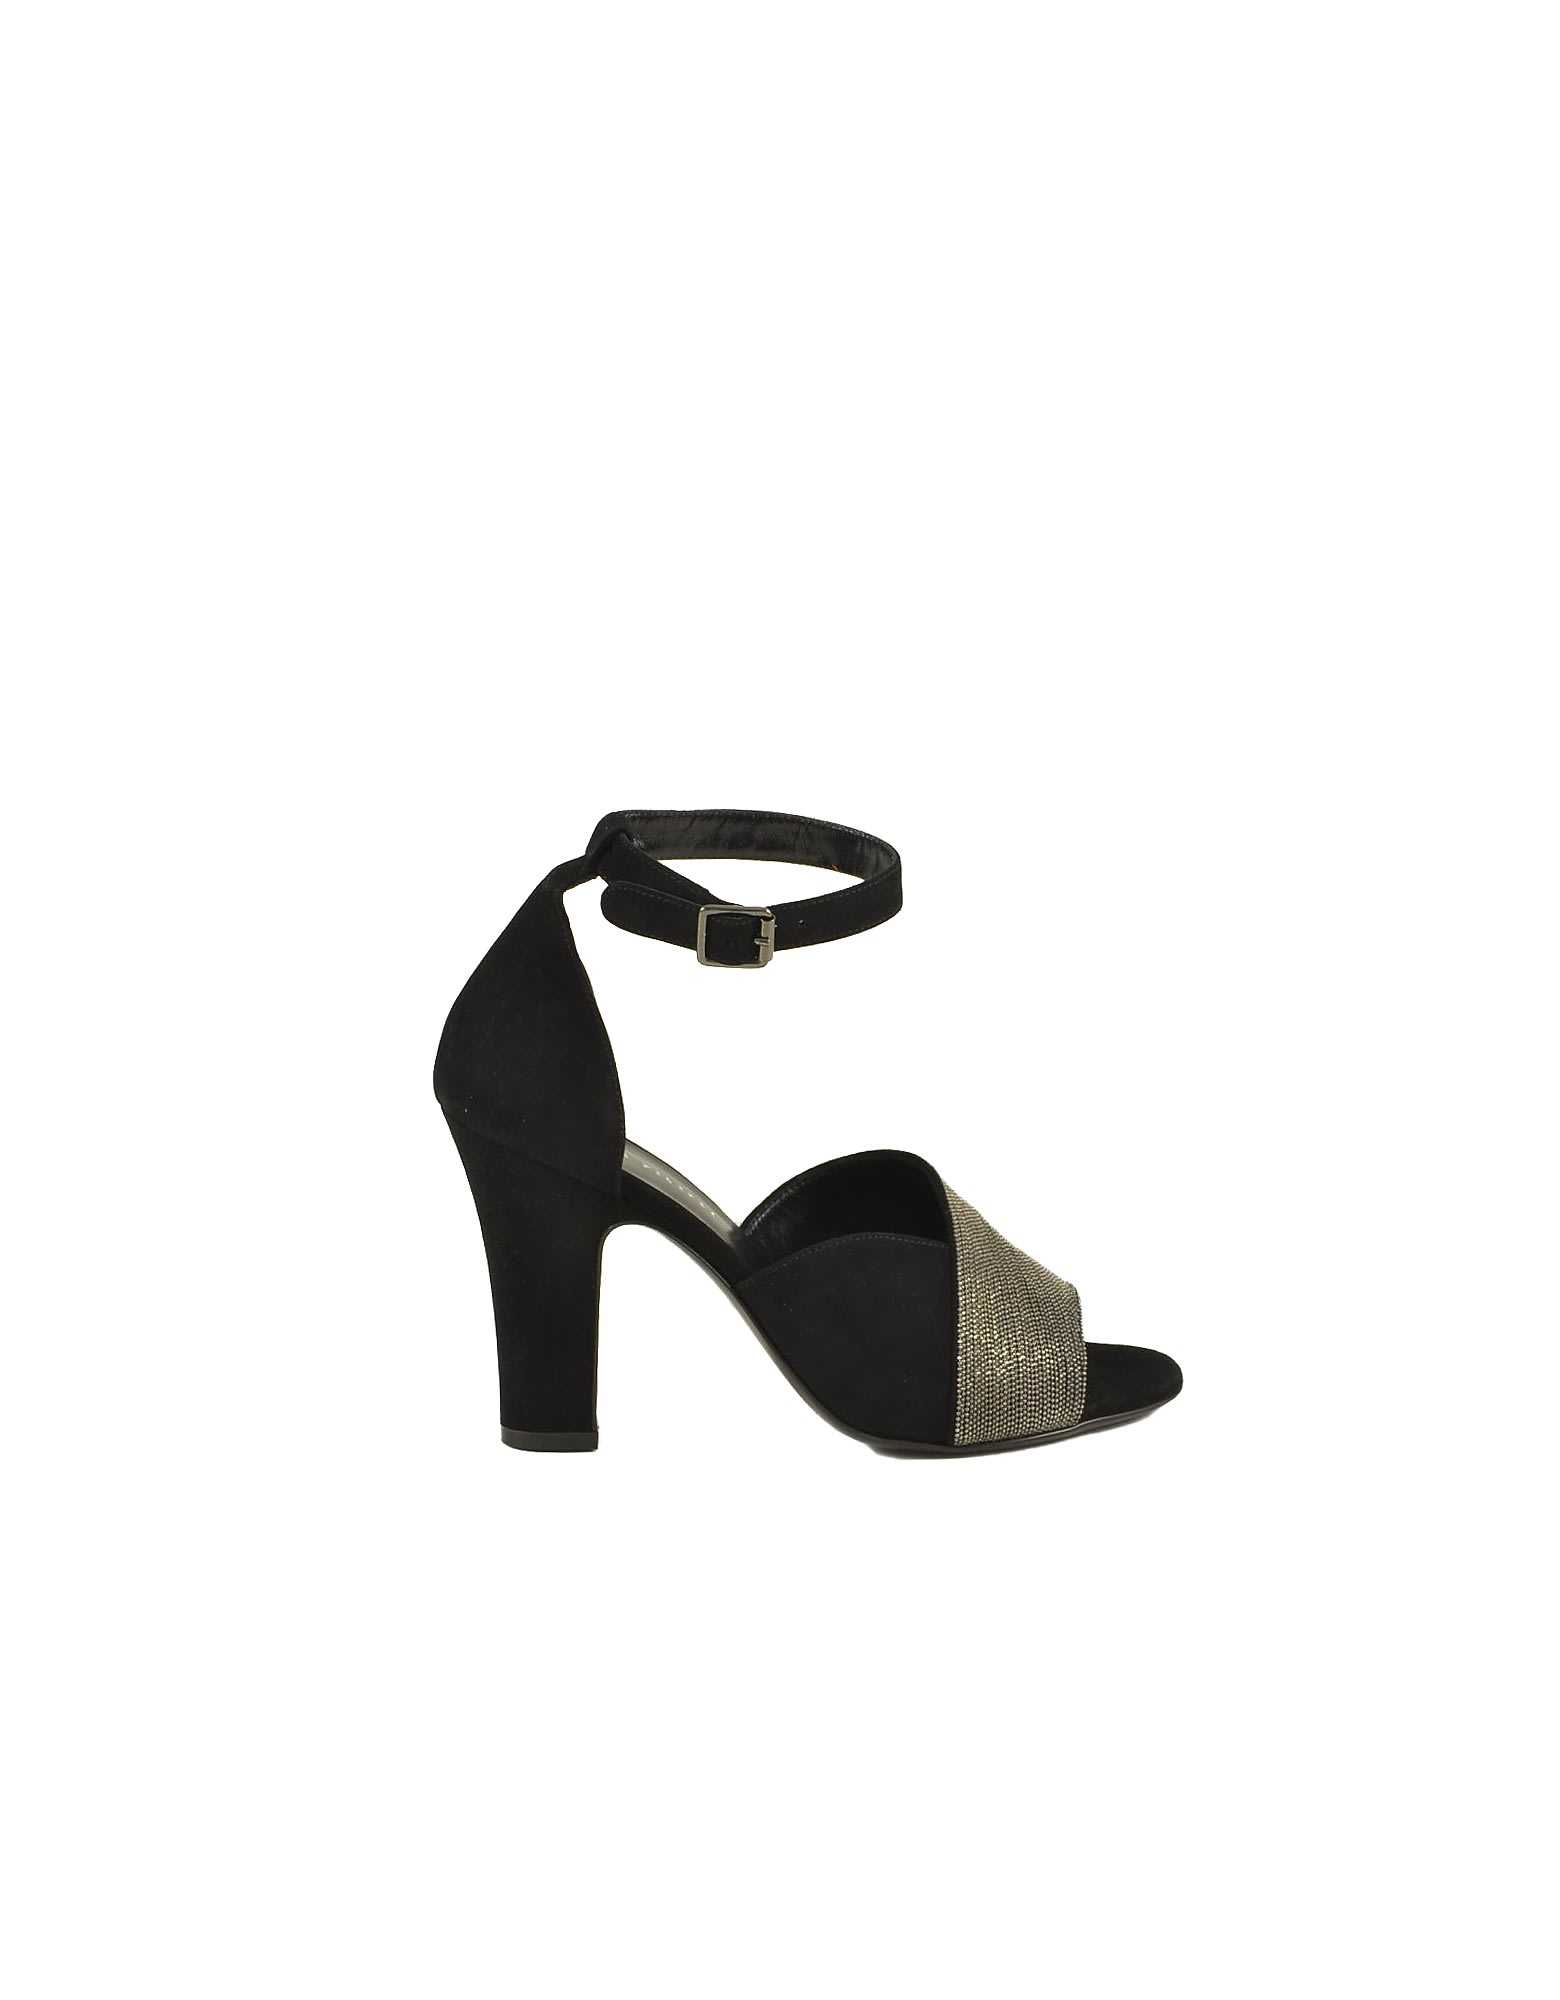 Fabiana Filippi Womens Black/silver Sandals